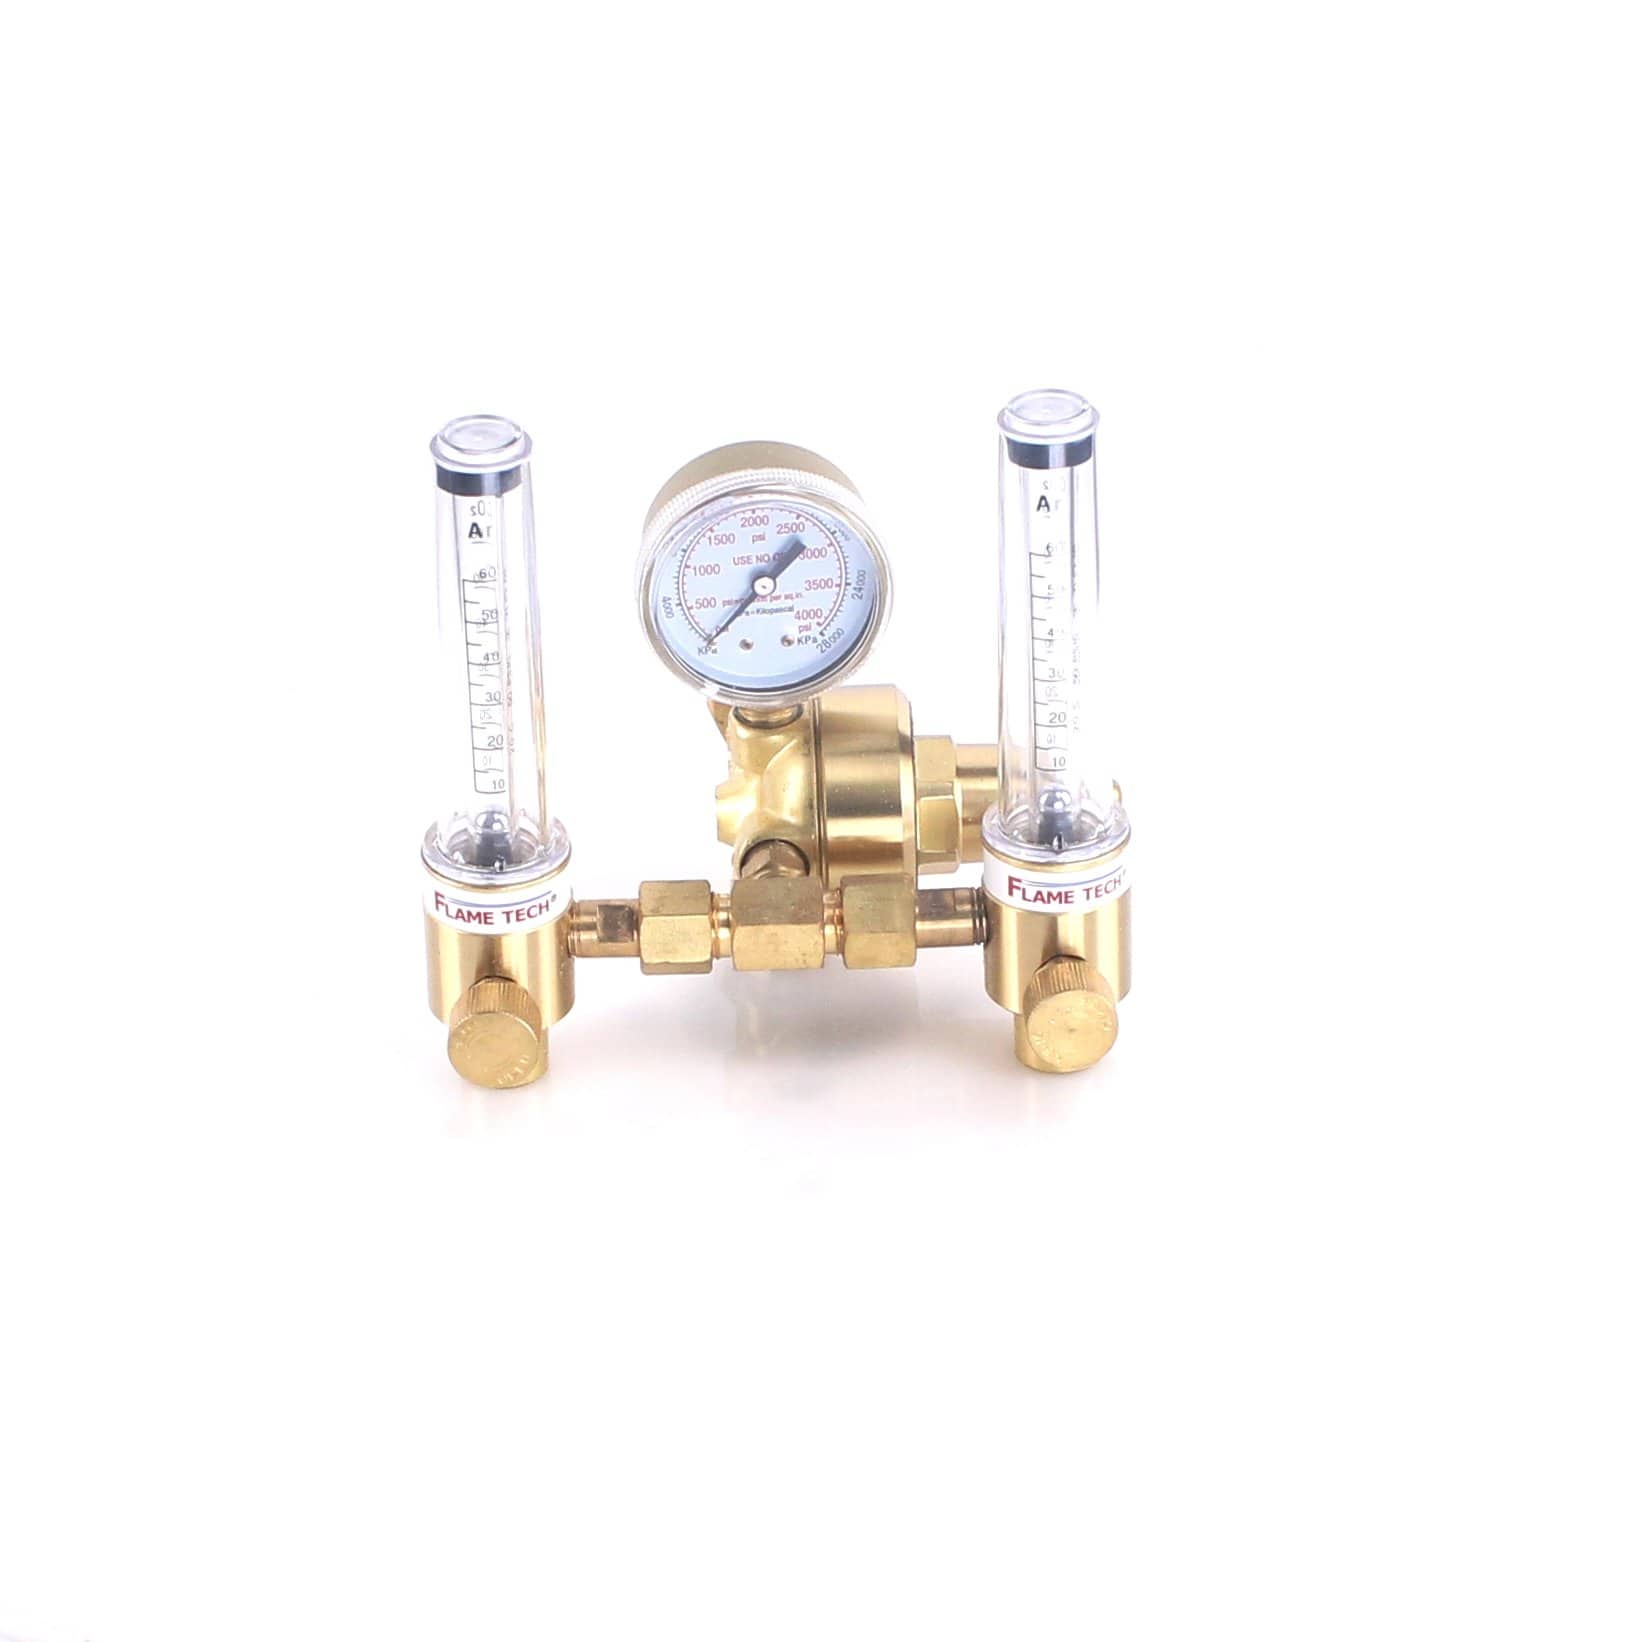 GENTEC Brass 195FM-9 Flowmeter for accurate regulation of gas flow NEW! 